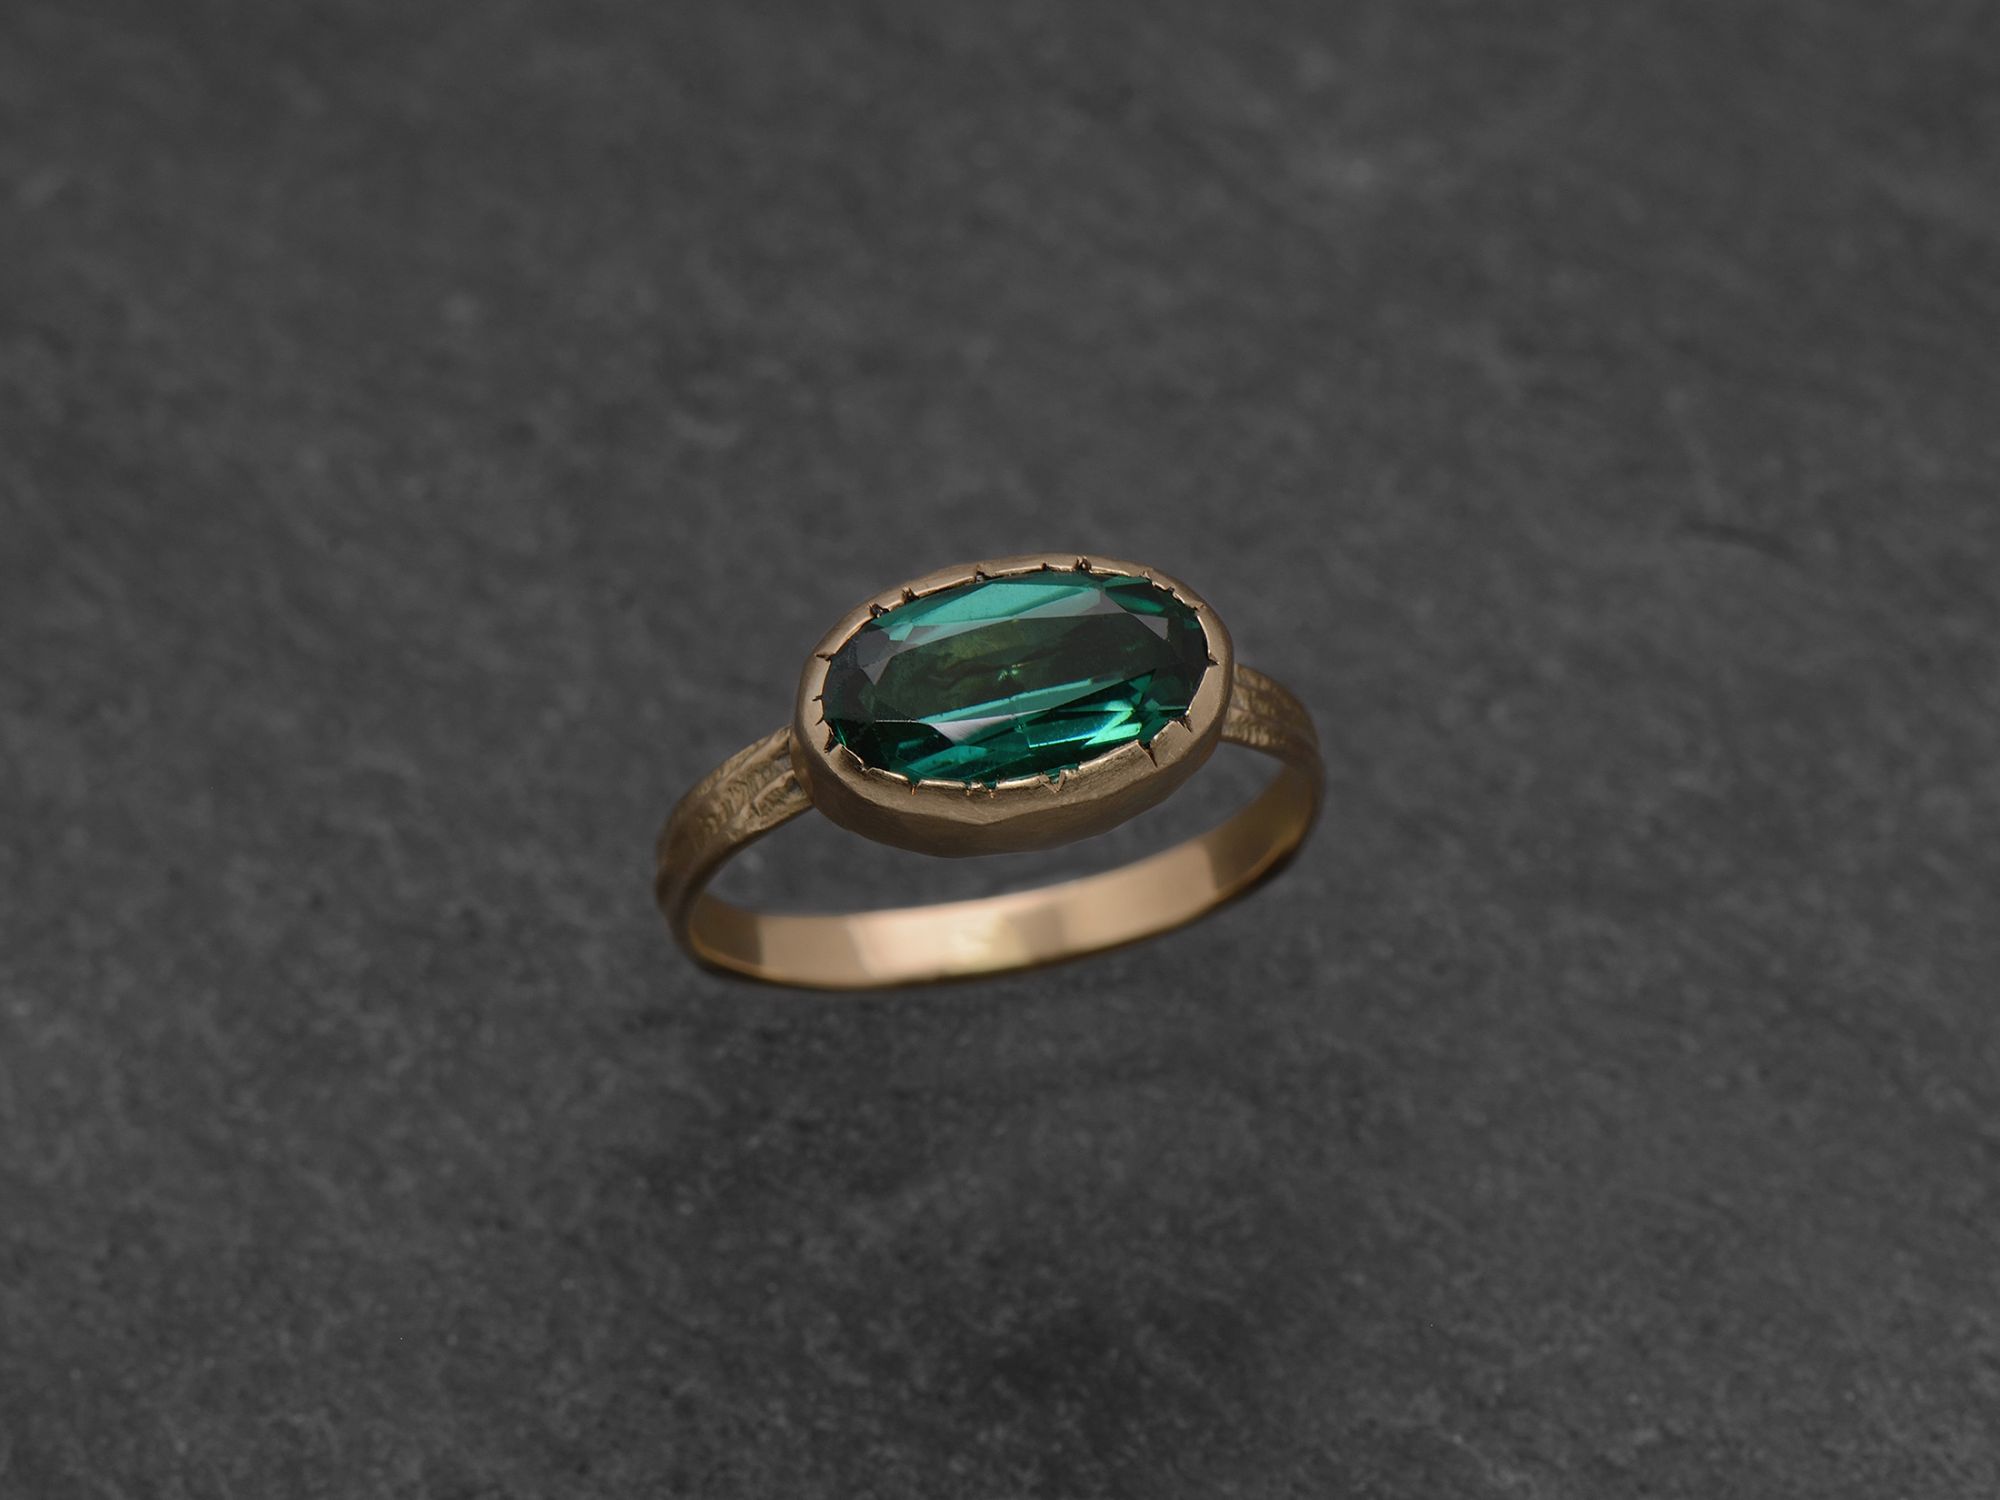 Ana Sitia 'navette' ring by Emmanuelle Zysman